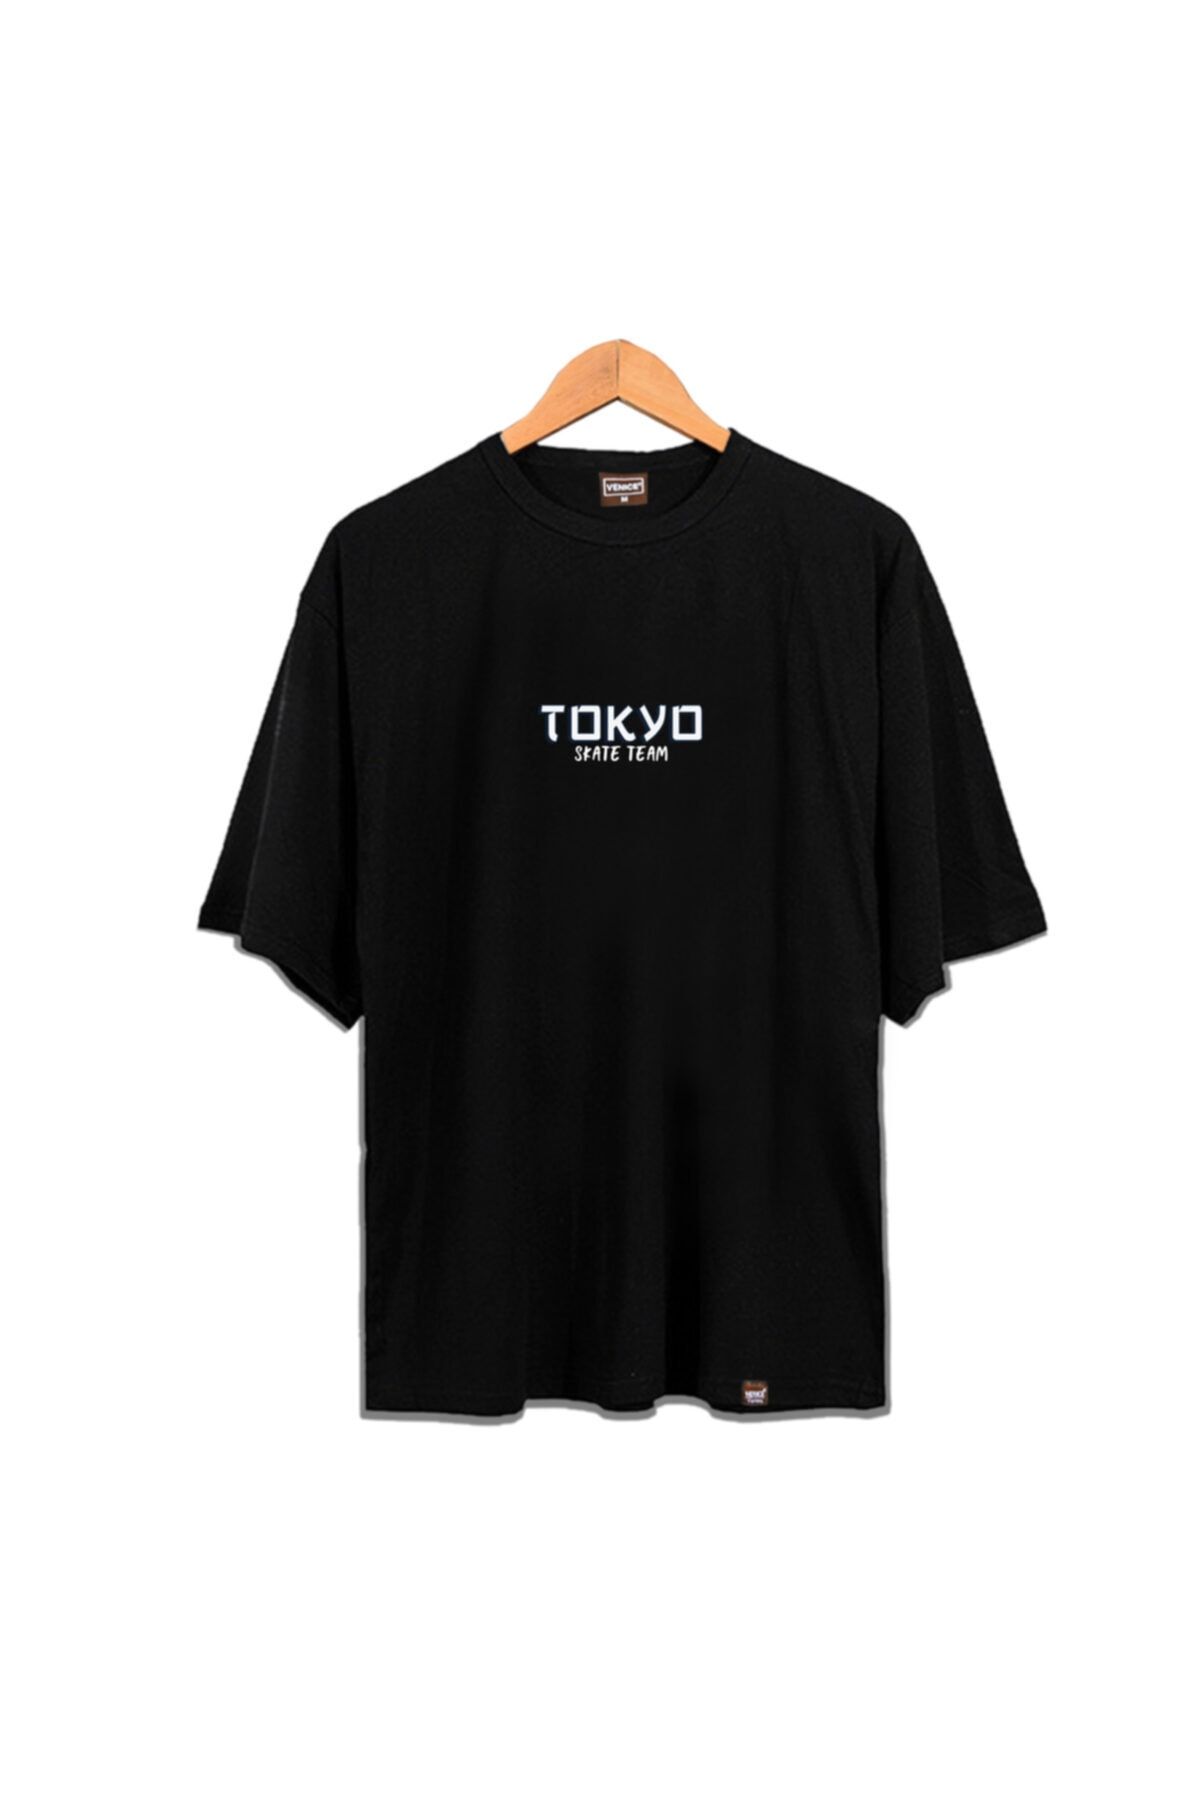 Venice Tokyo Skate Team Keep Pushing Oversize Unisex Tshirt